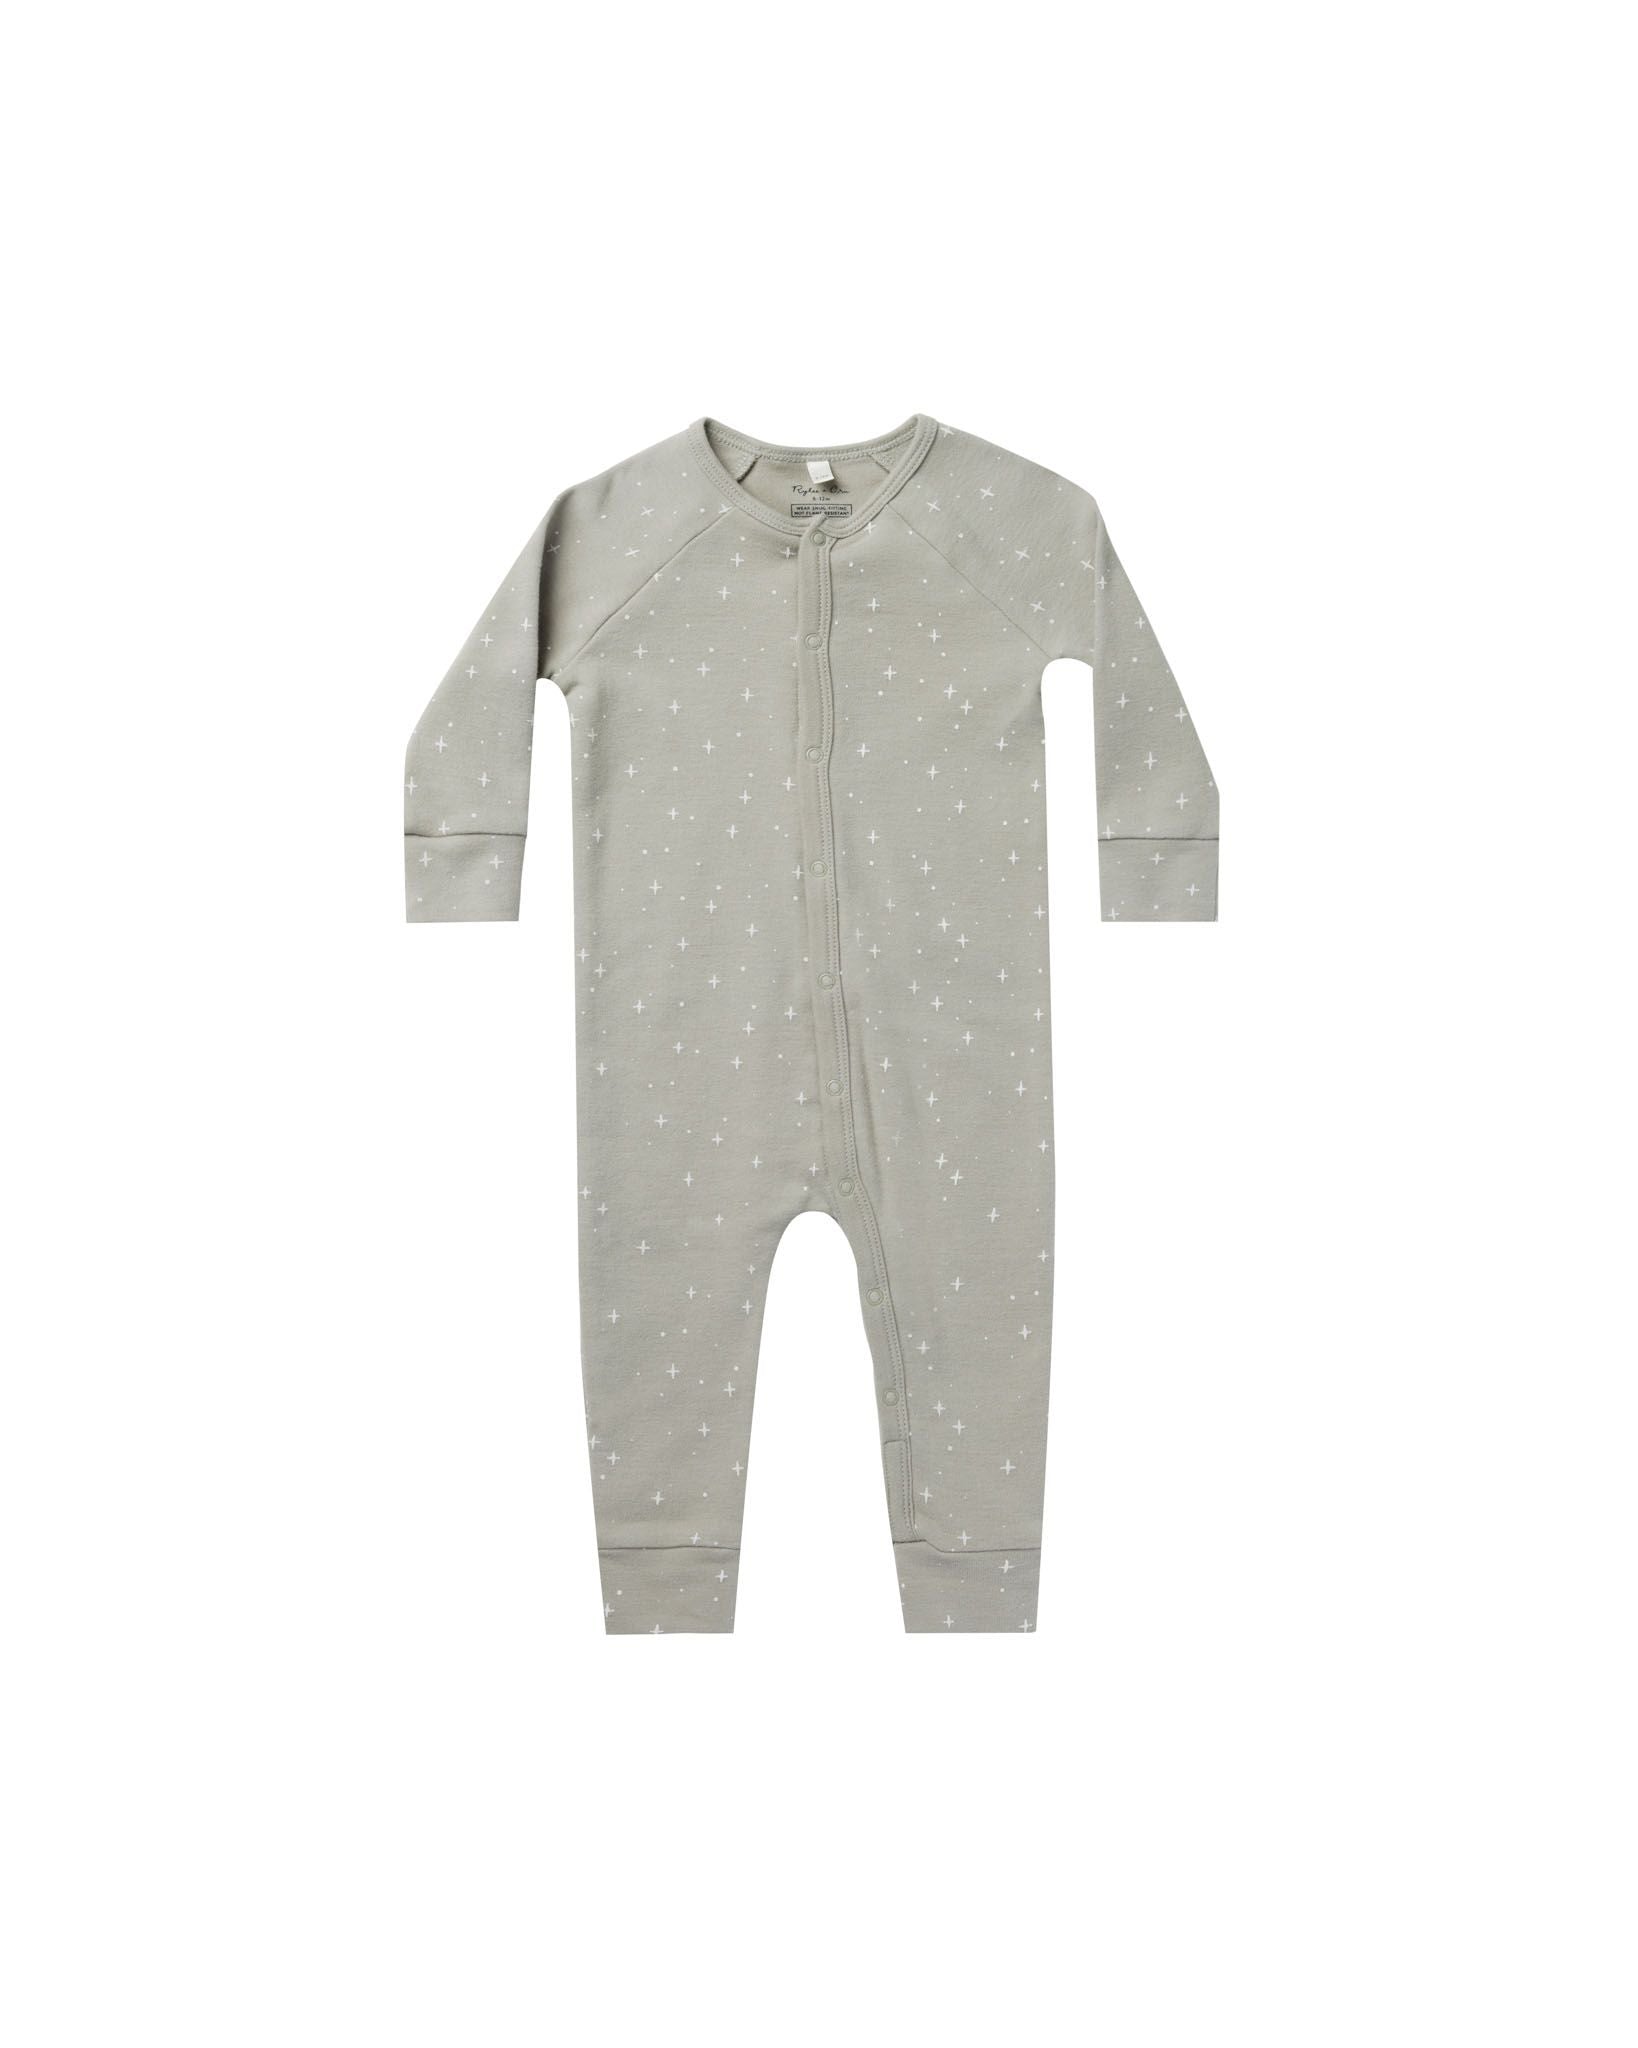 Organic Pajama Long John in Twinkle  - Doodlebug's Children's Boutique